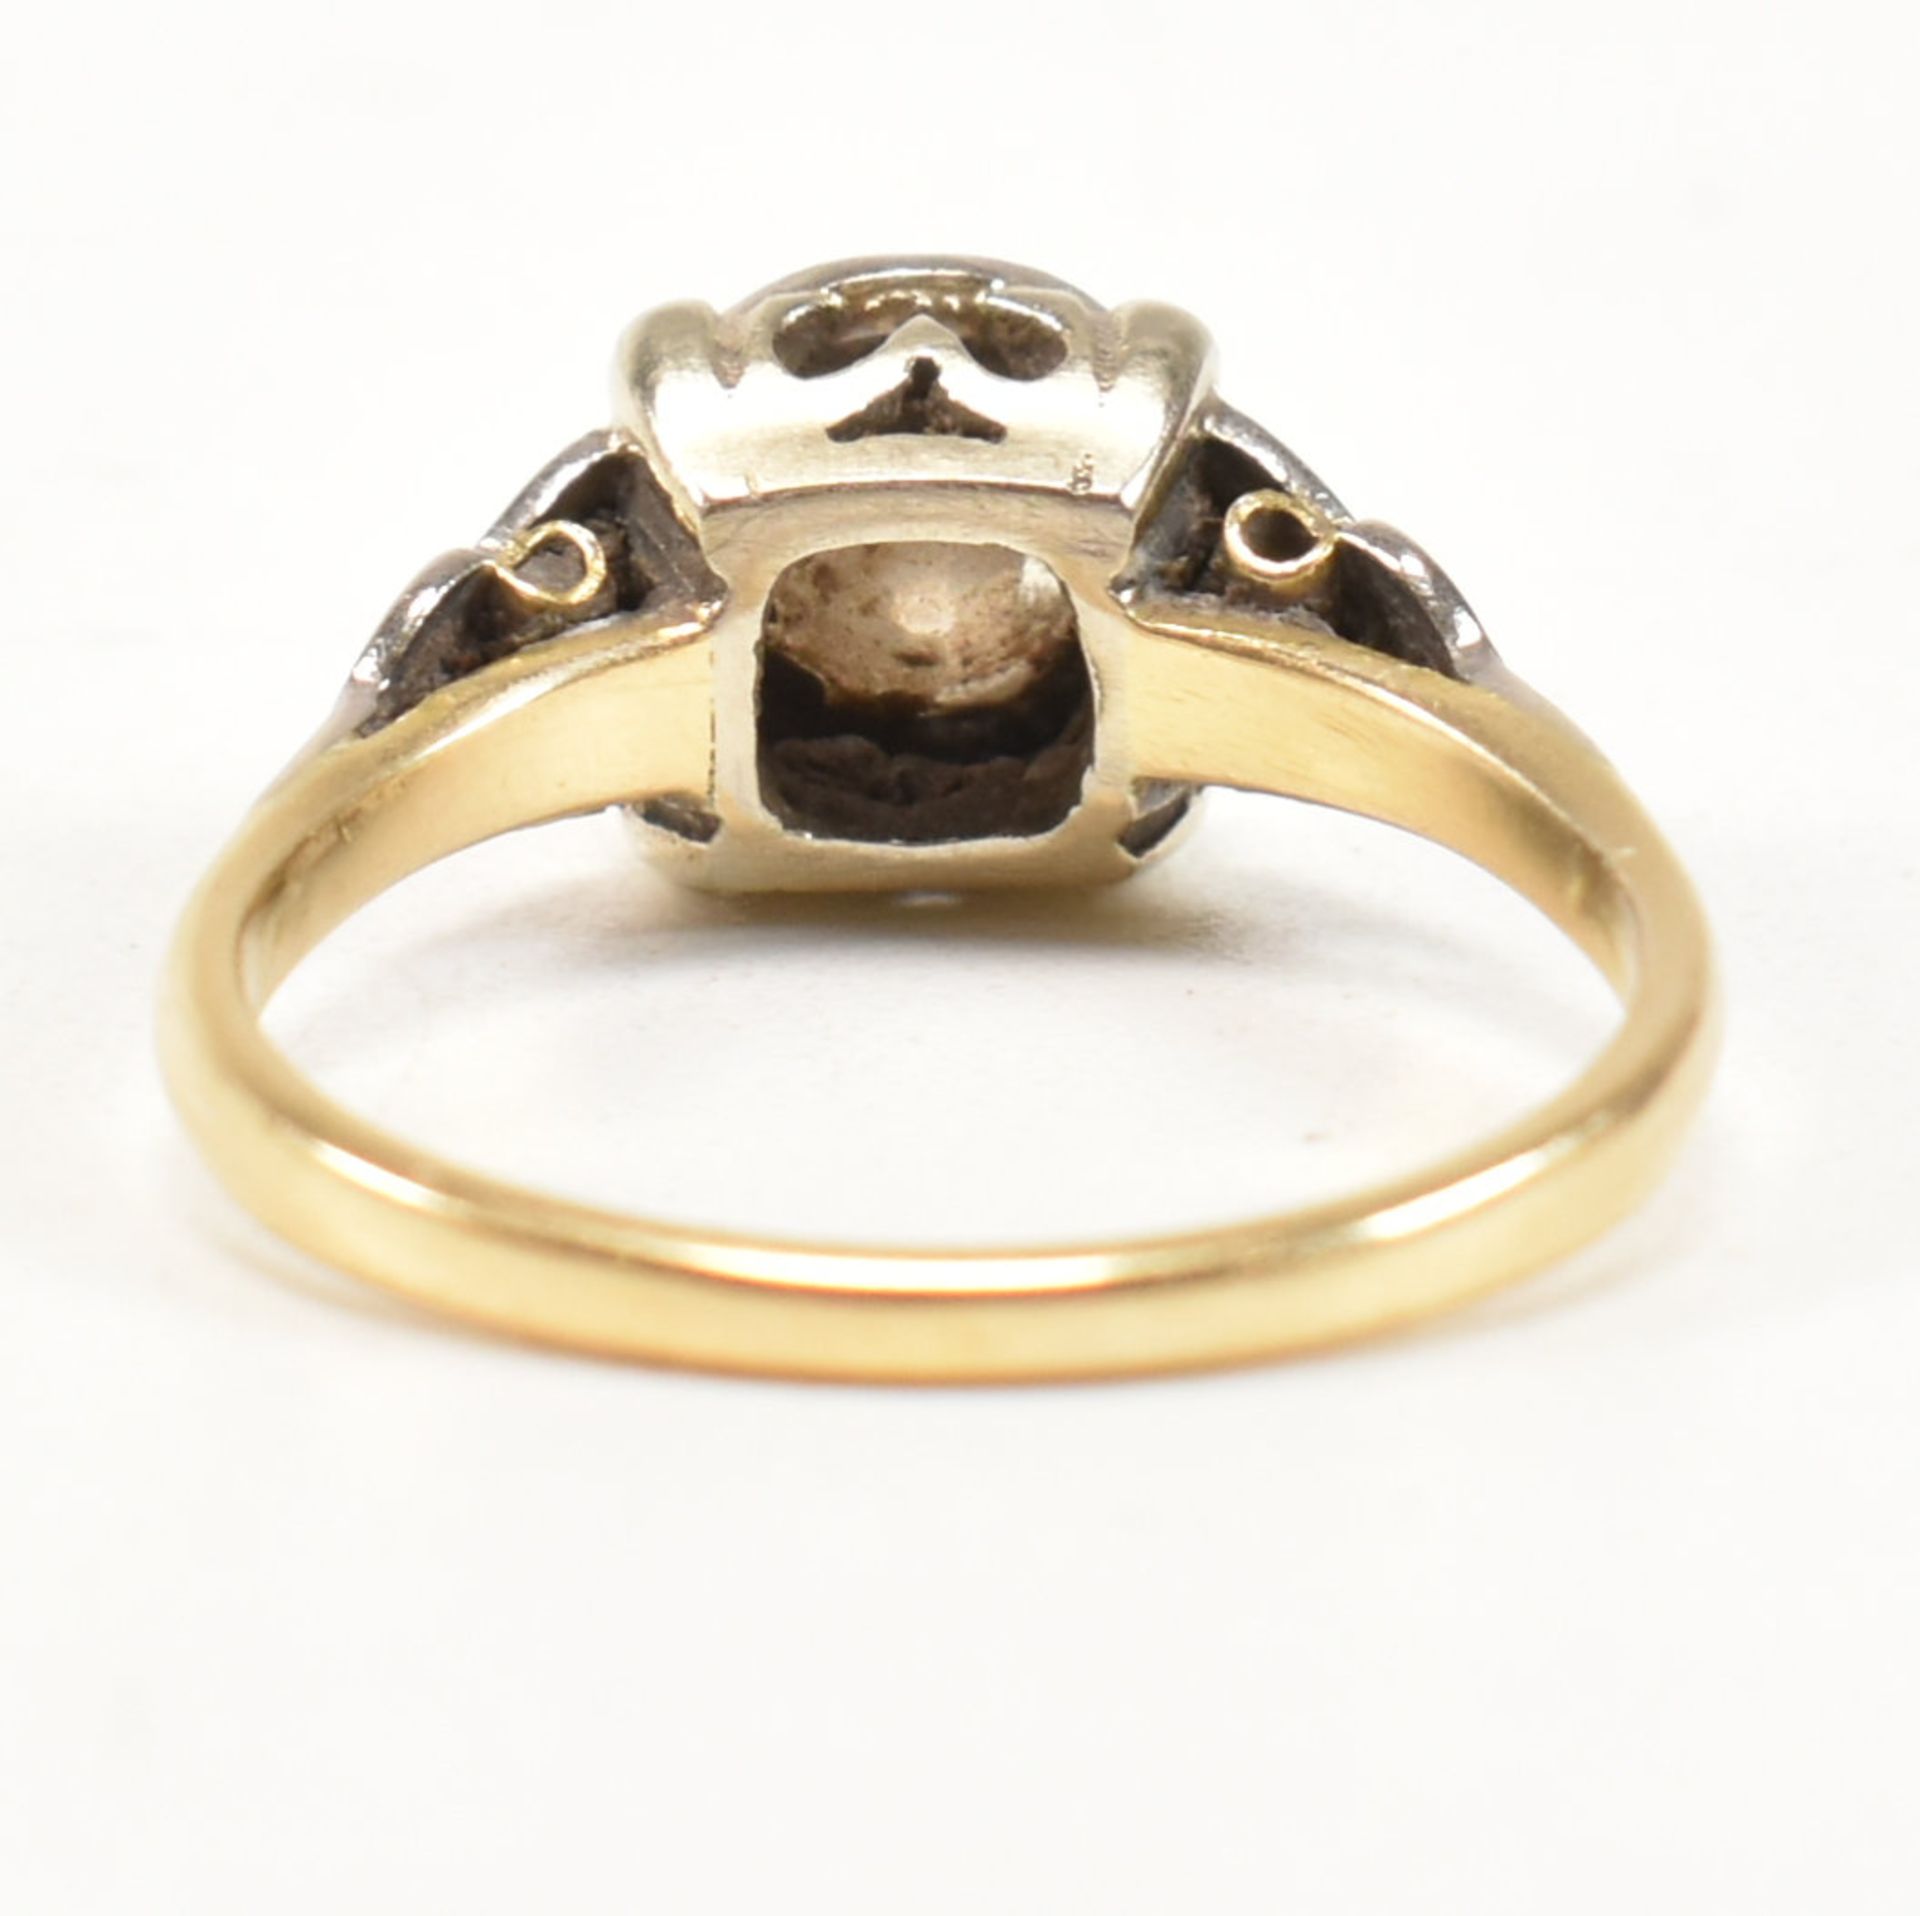 EDWARDIAN 18CT GOLD & PLATINUM DIAMOND SOLITAIRE RING - Image 4 of 8